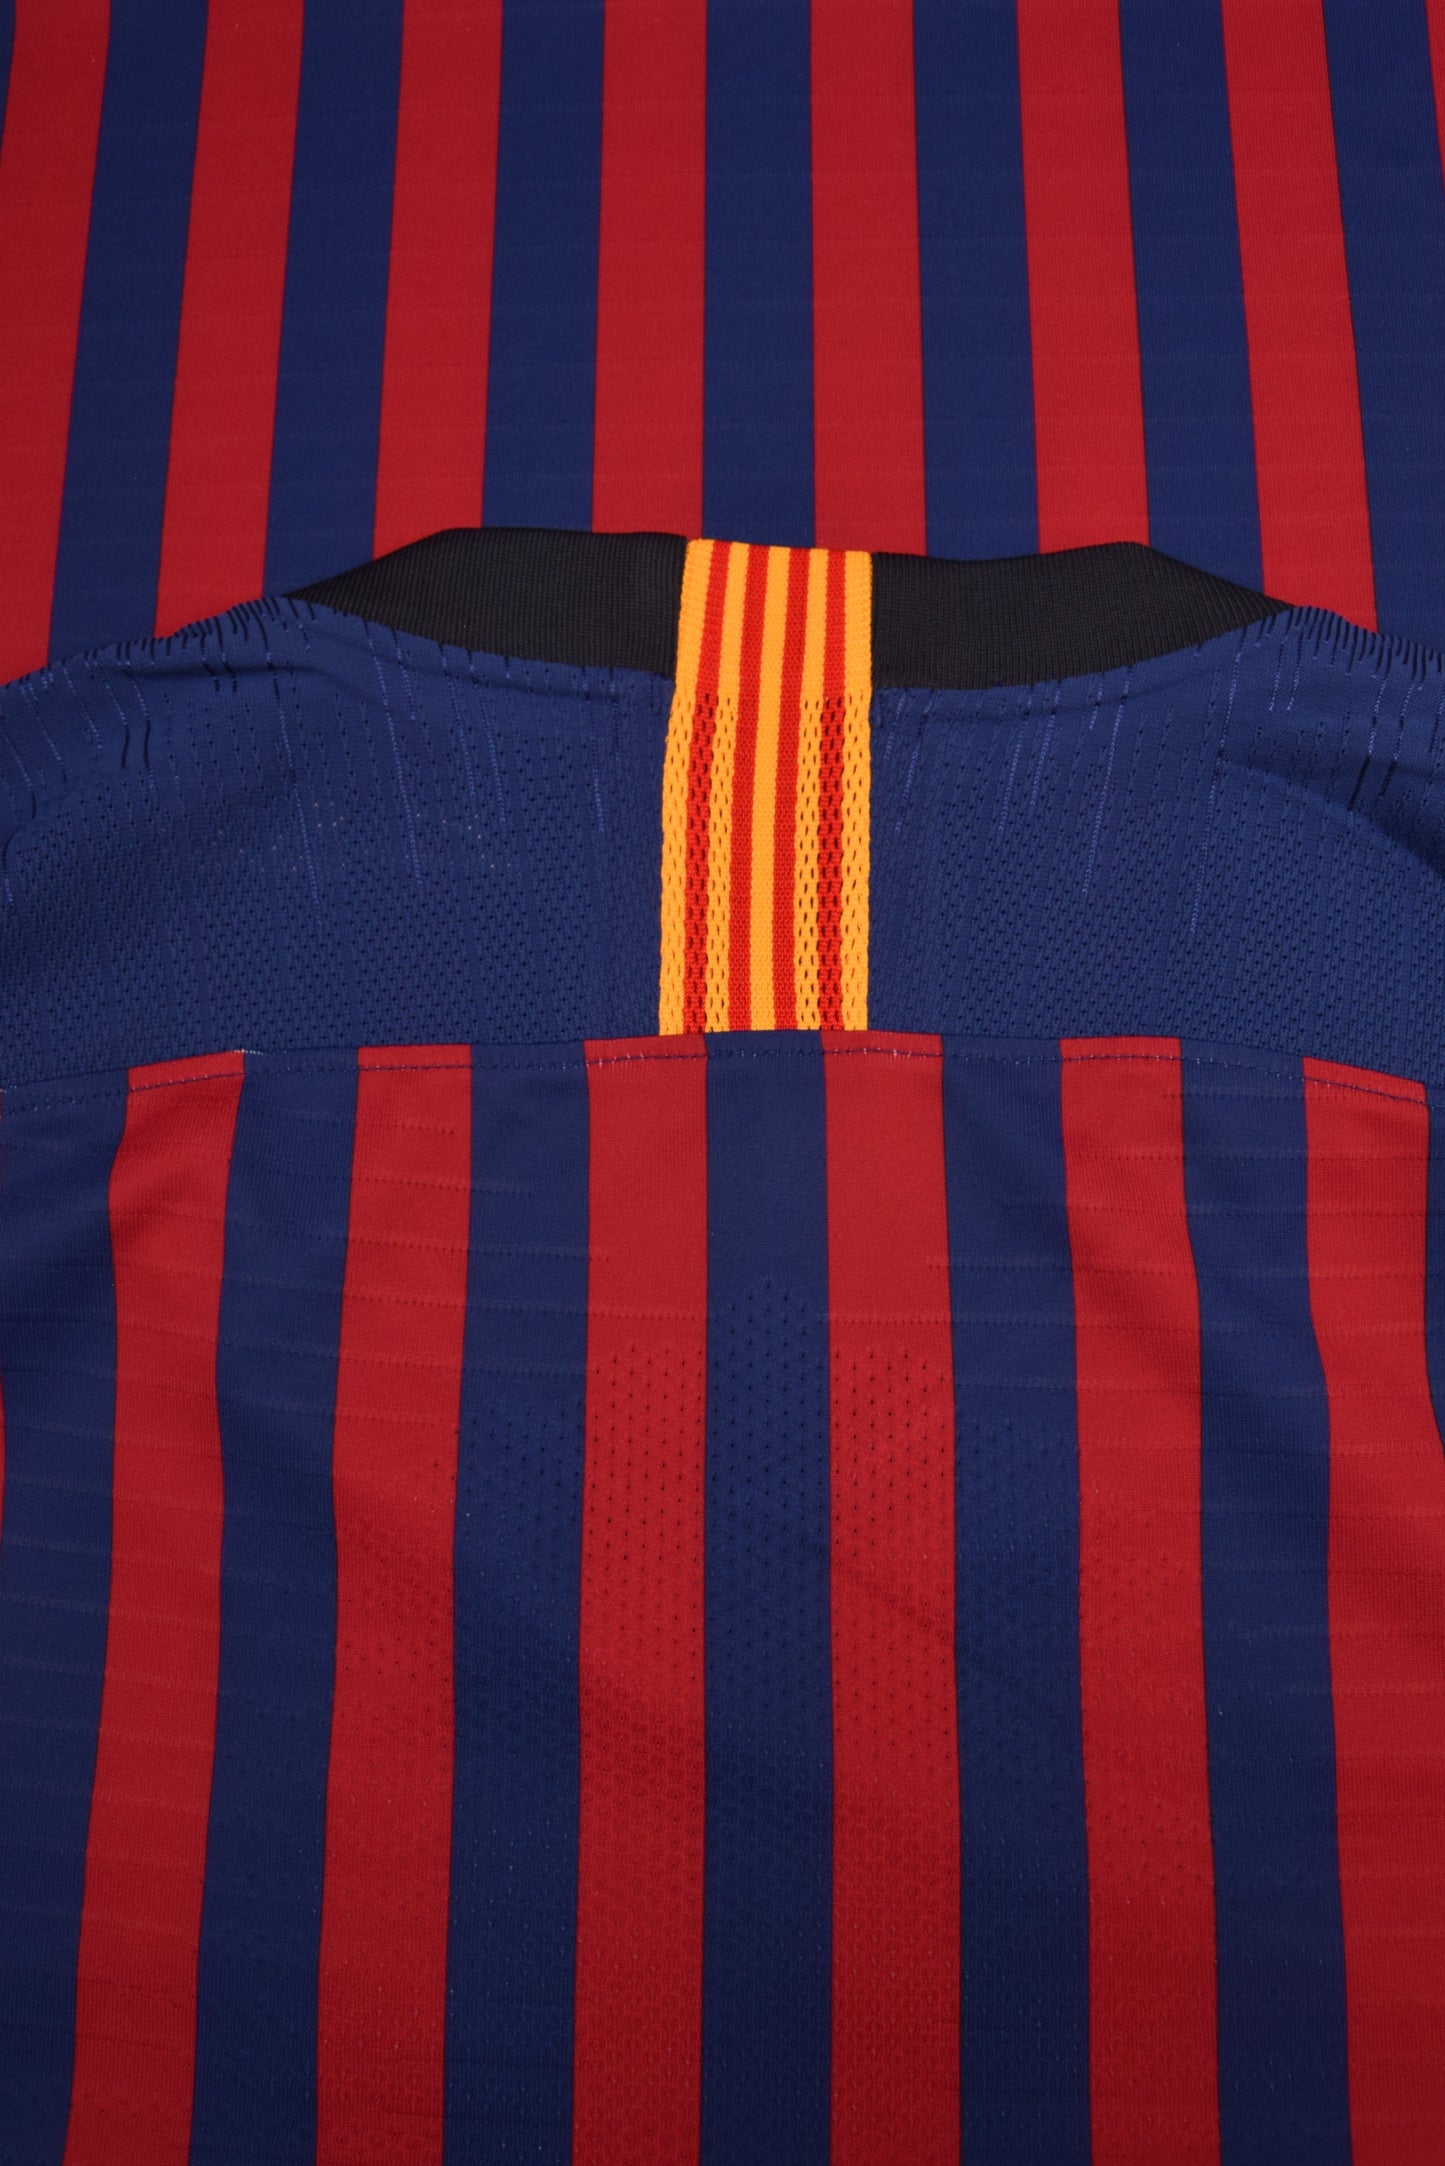 Authentic New FC Barcelona Nike Vaporknit 2018 - 2019 Player Issue Home Football Shirt BNWT Deadstock Size XL Red Blue Rakuten